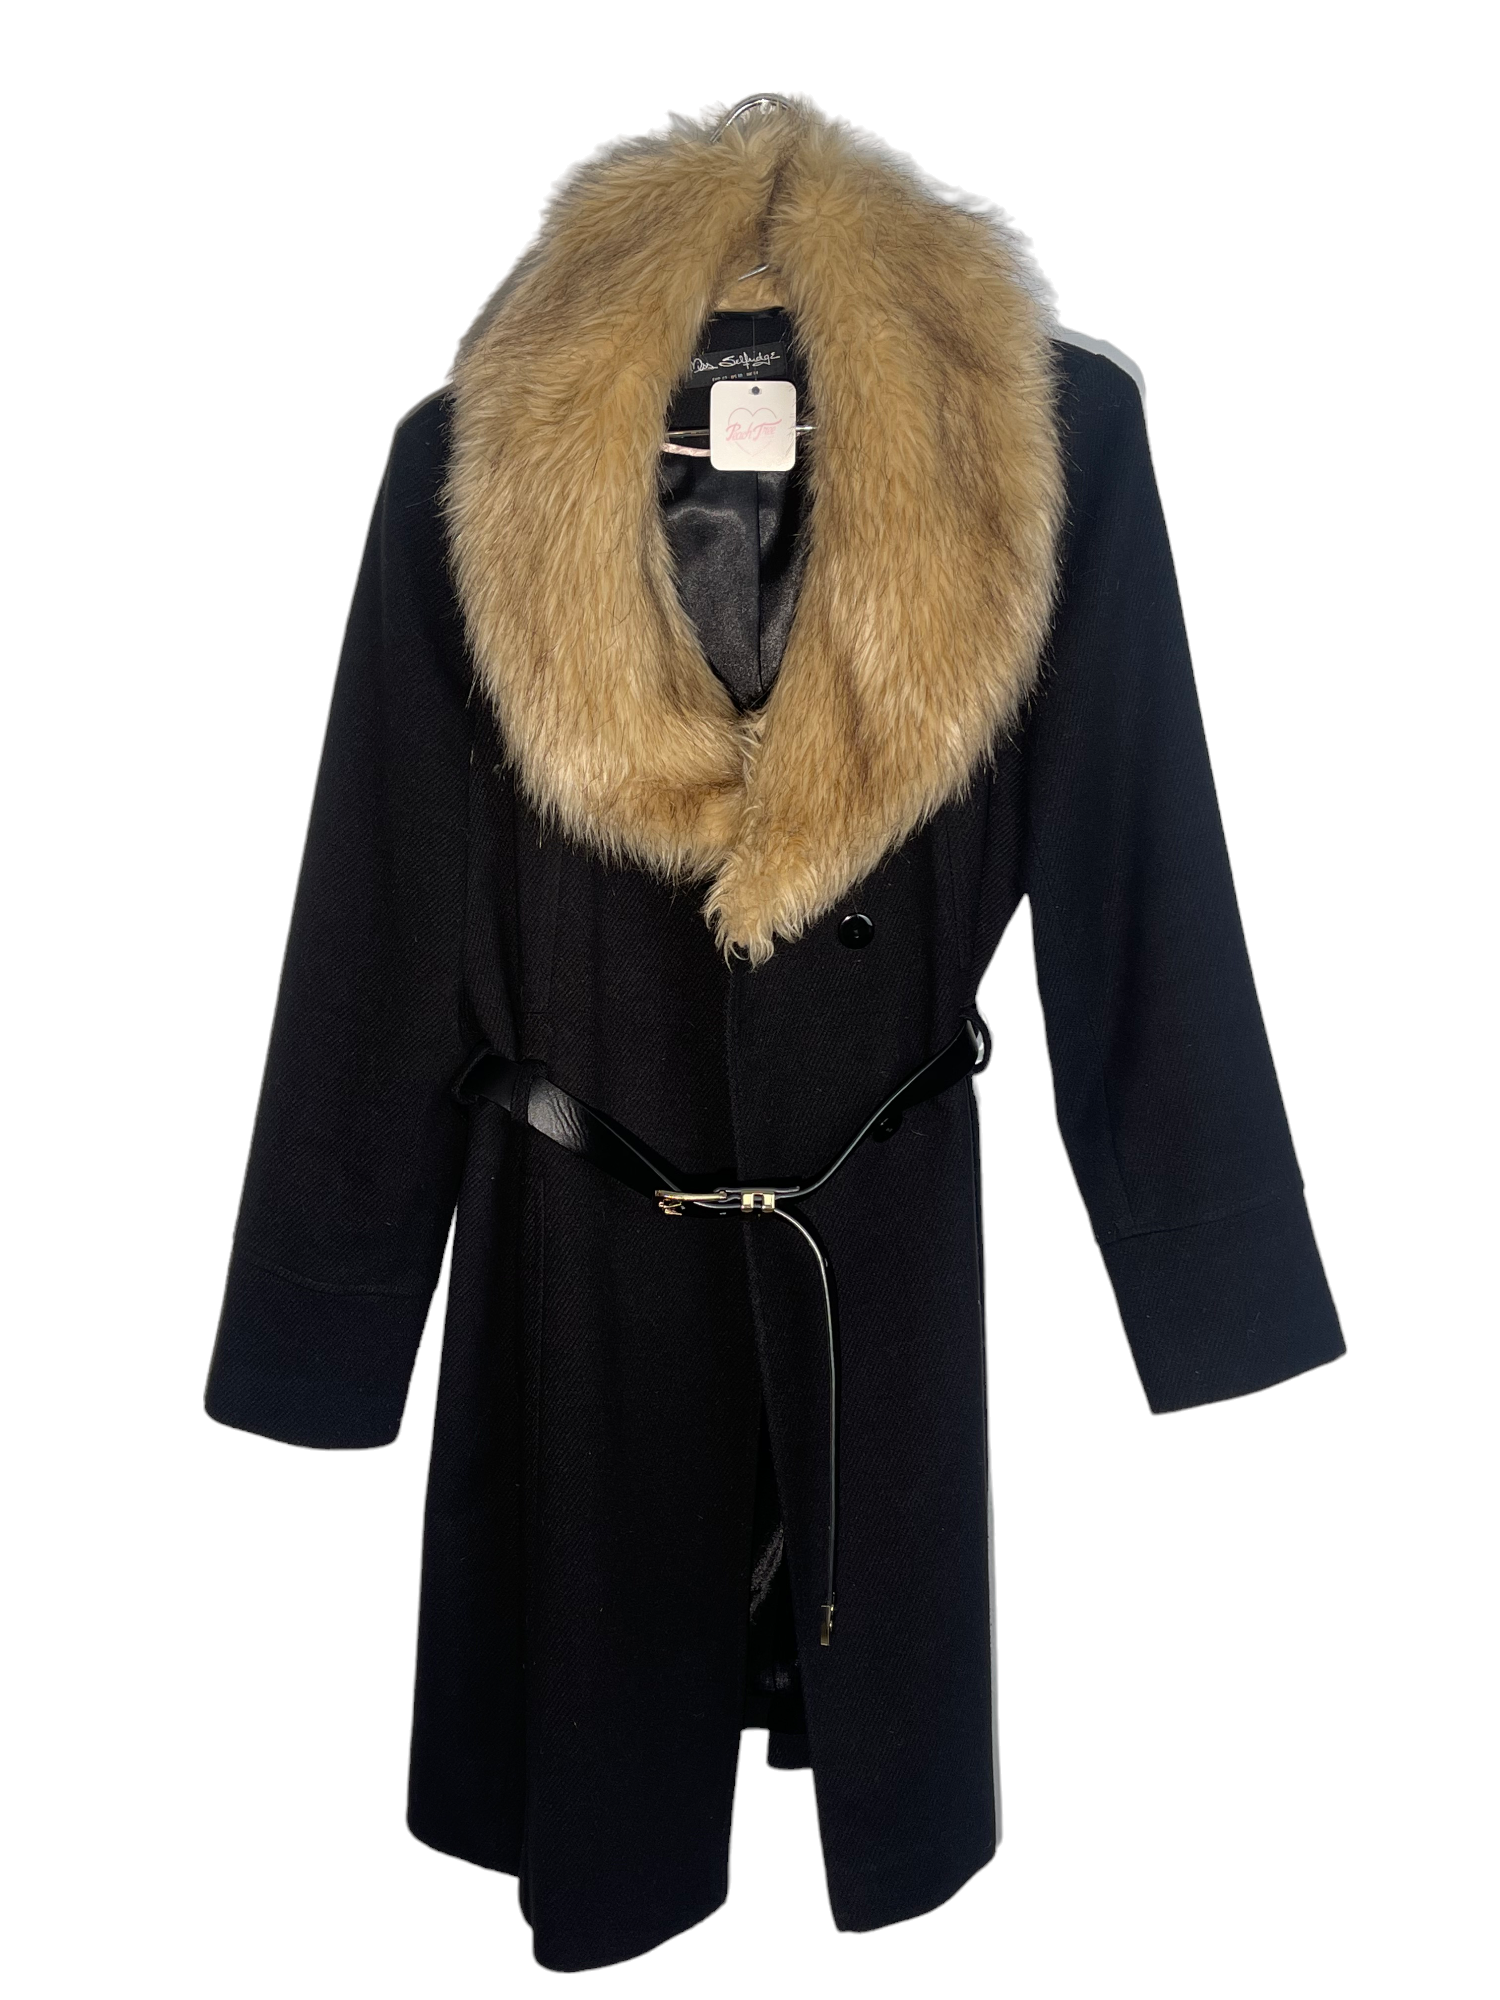 Black Coat With Brown Fur And Belt